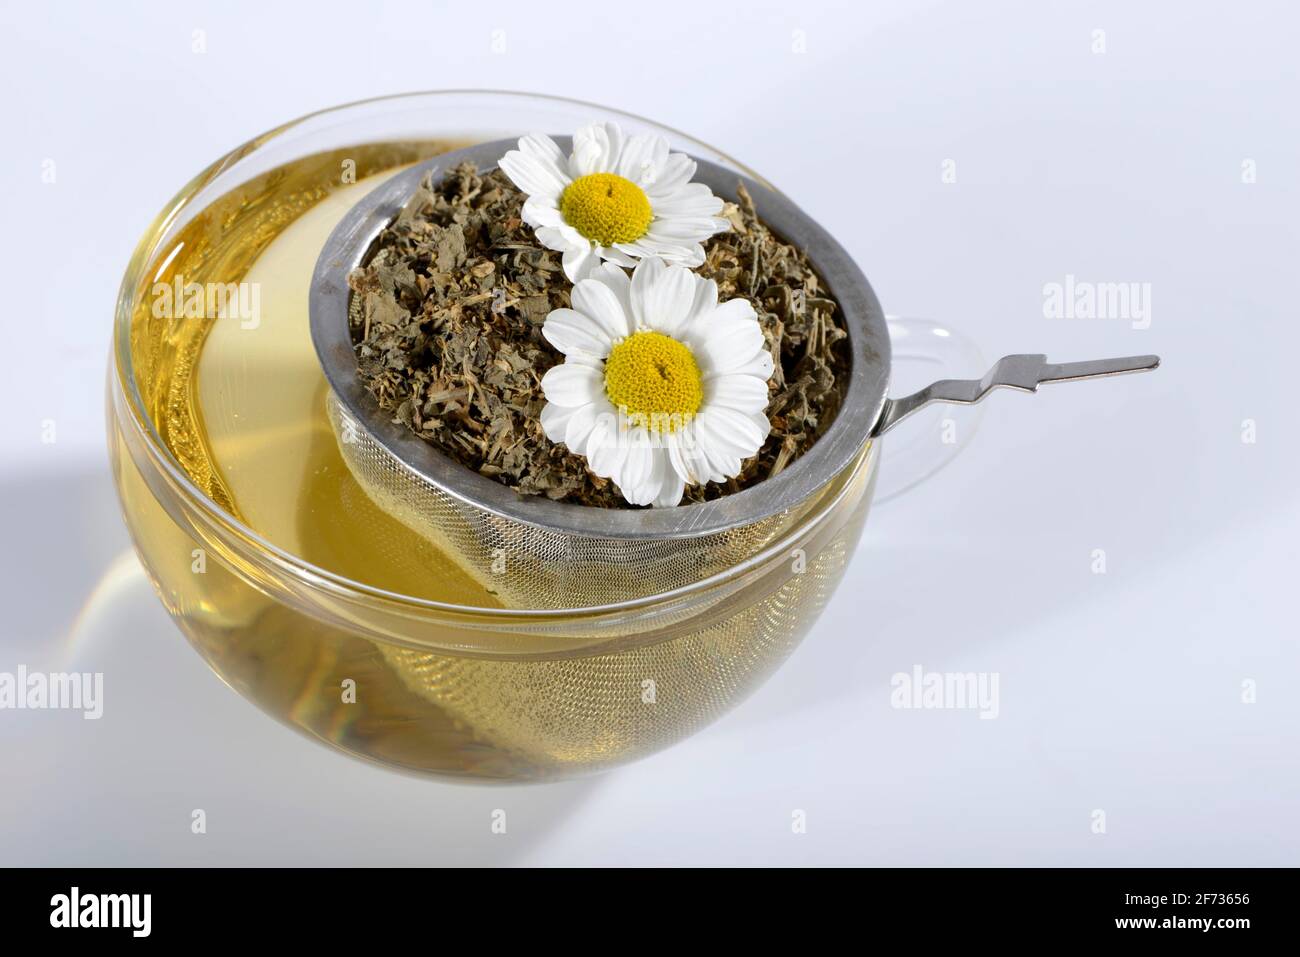 Cup of butterwort tea (Chrysanthemum parthenium) butterwort, tea strainer Stock Photo